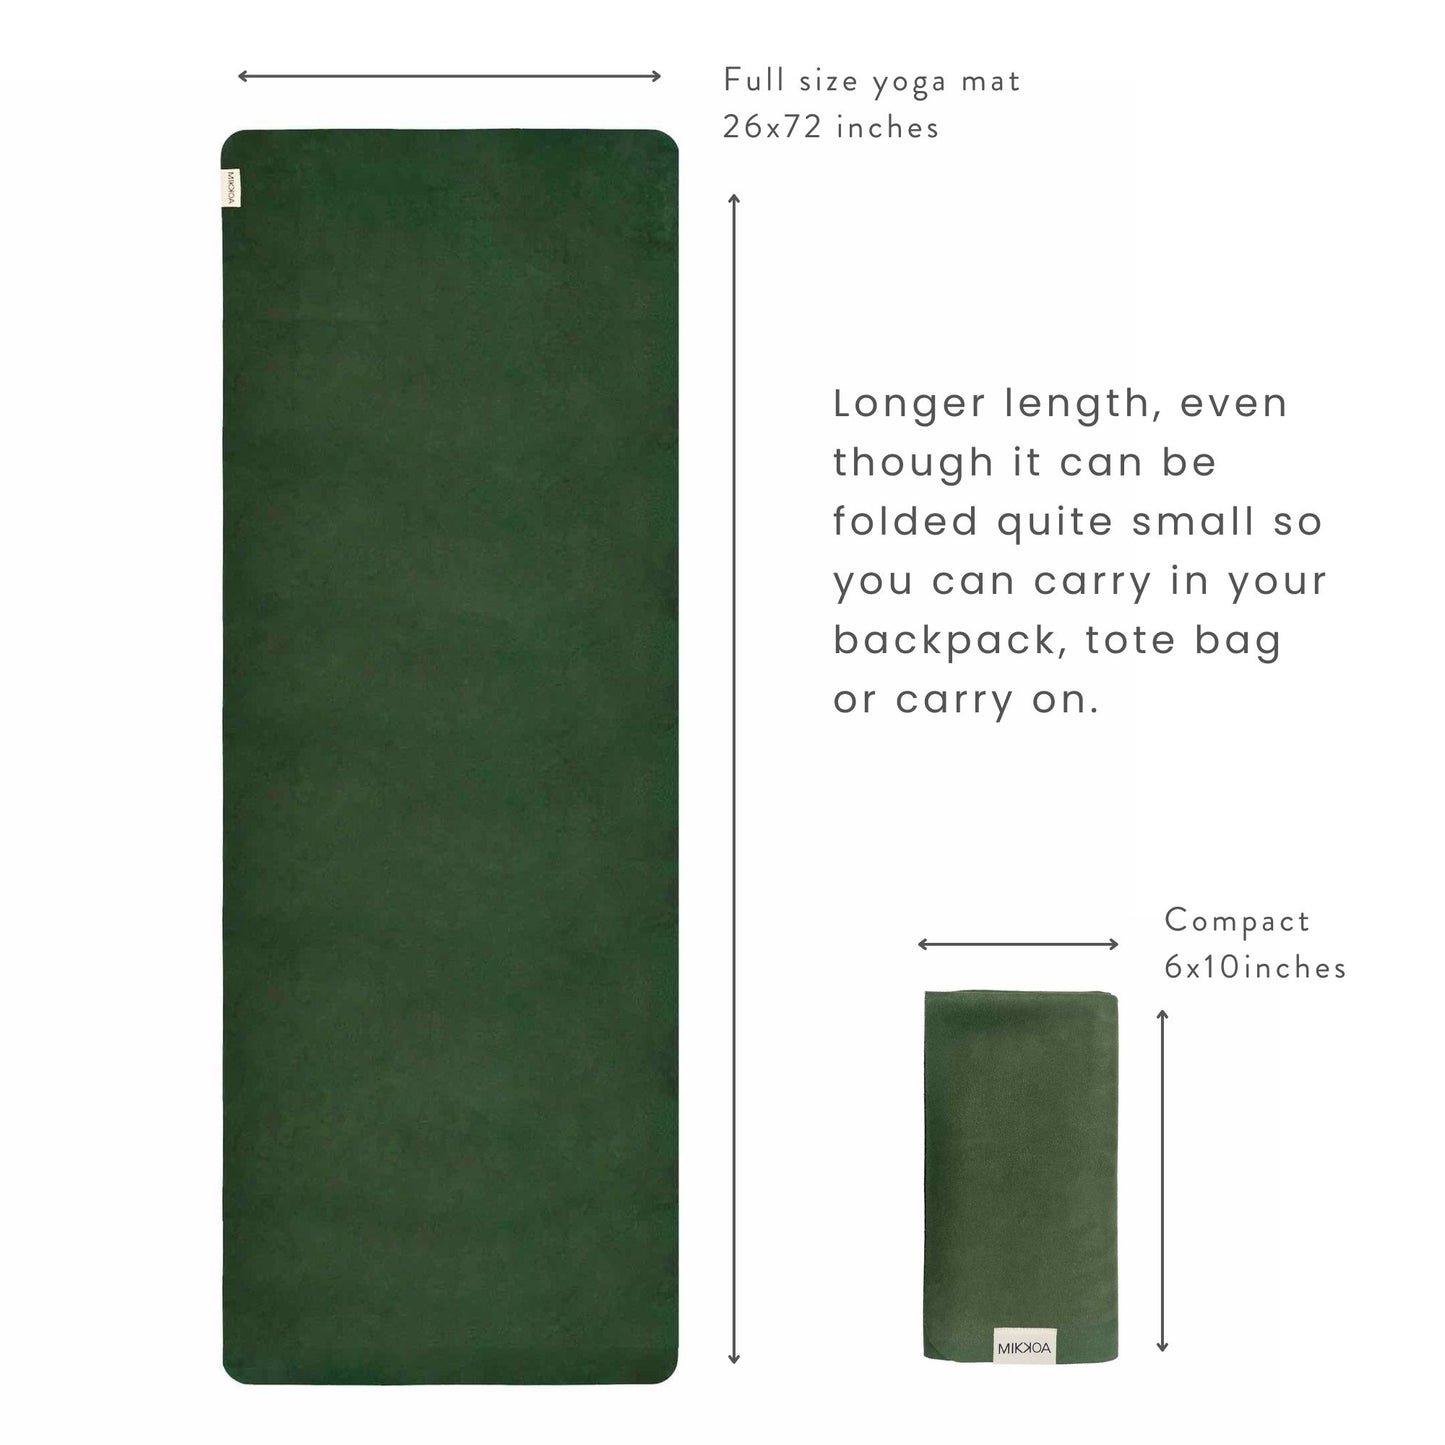 Foldable Yoga Mat-Green Open and Folded Yoga Mat-Mikkoa Foldable Yoga Mat